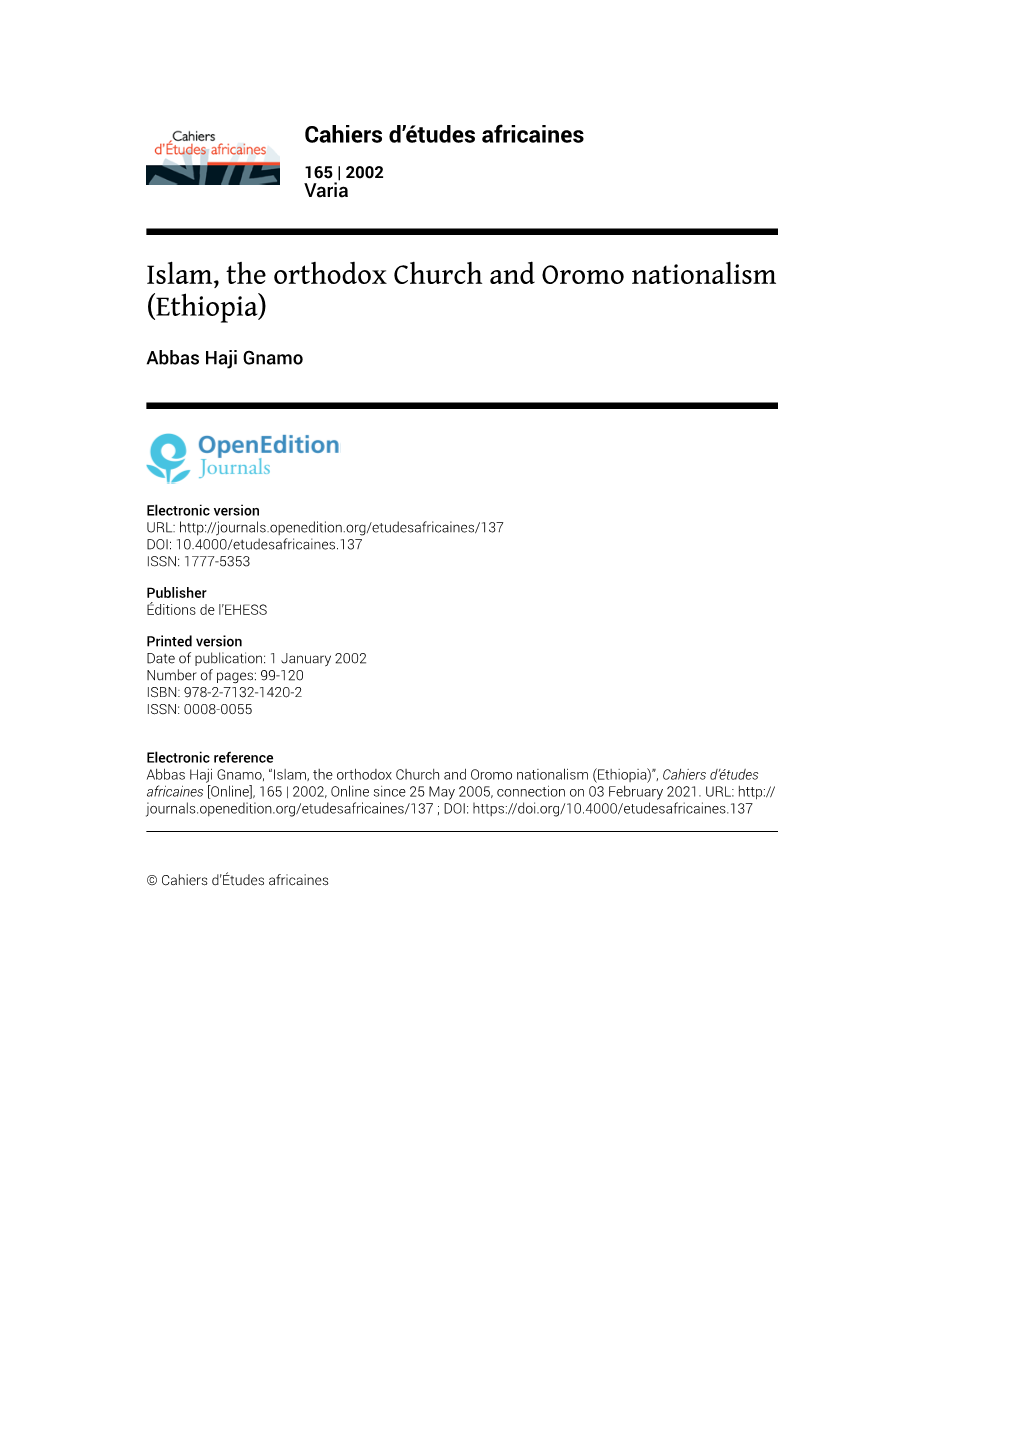 Islam, the Orthodox Church and Oromo Nationalism (Ethiopia)